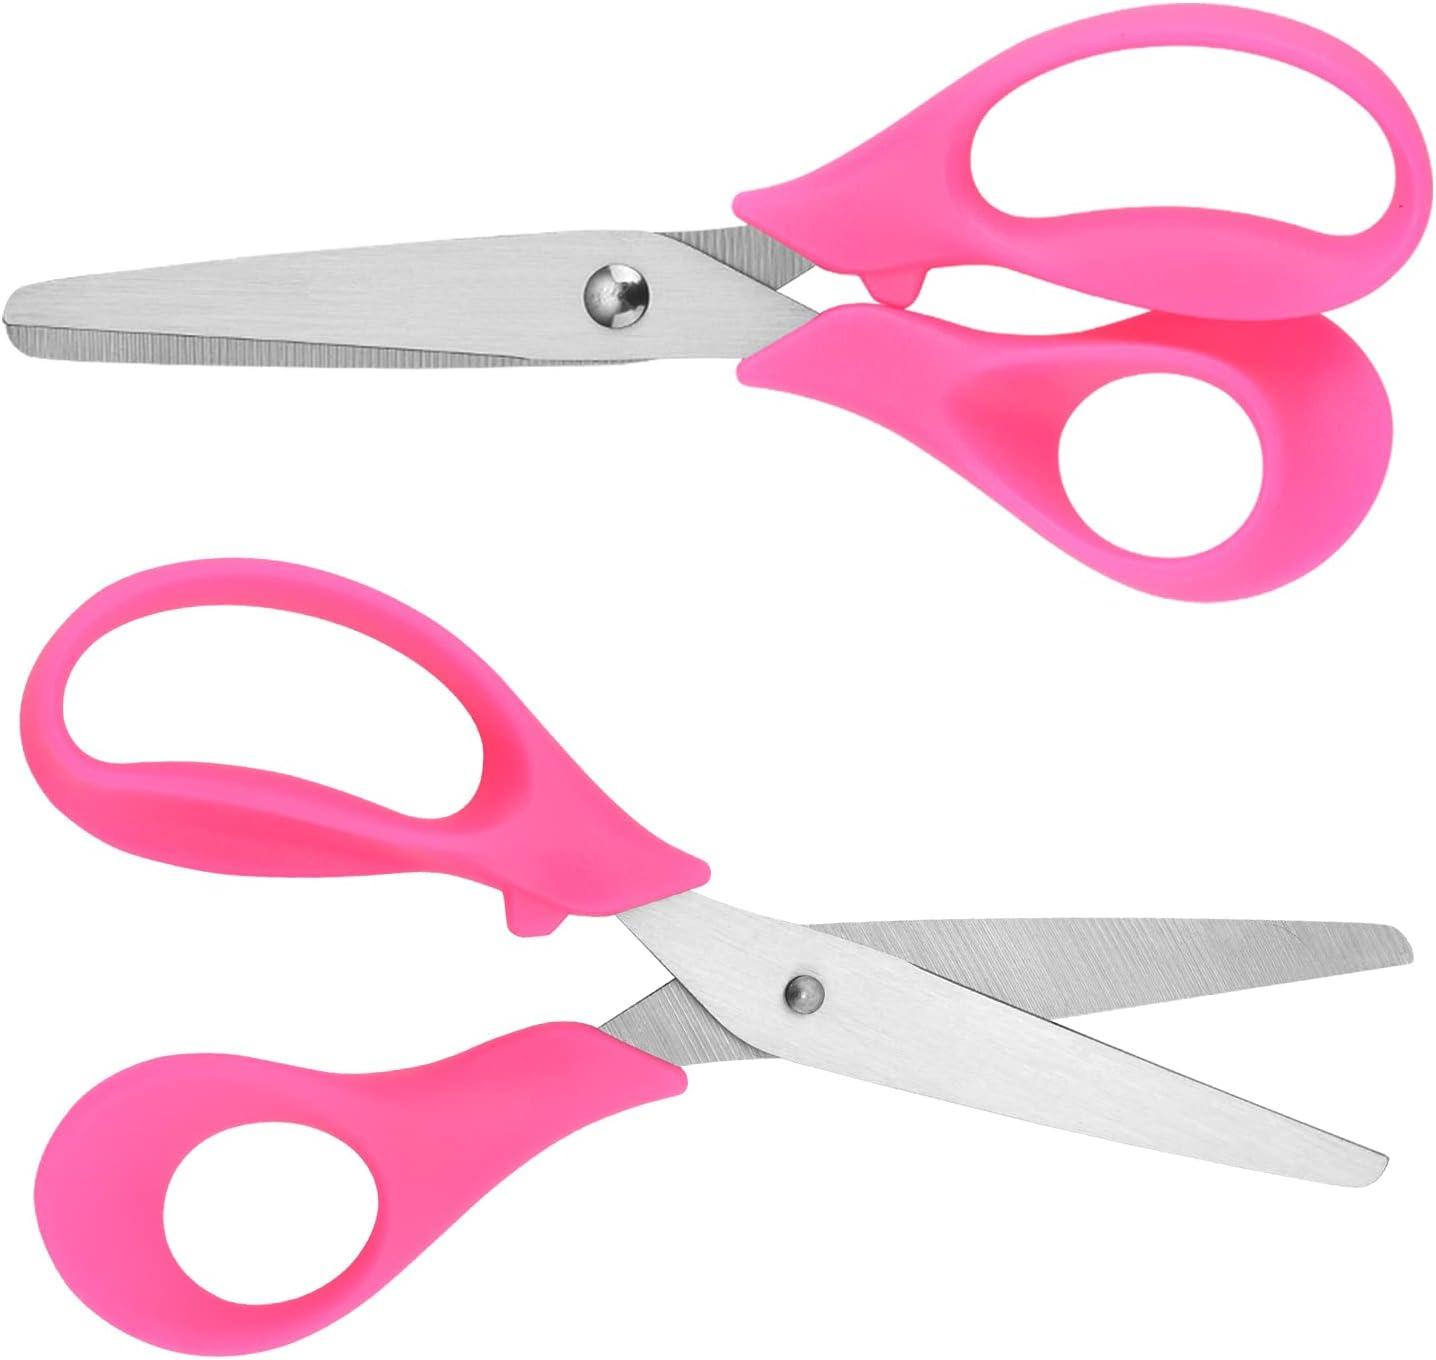 Left-Handed Kinder Scissors from Scherenmakufaktur Paul